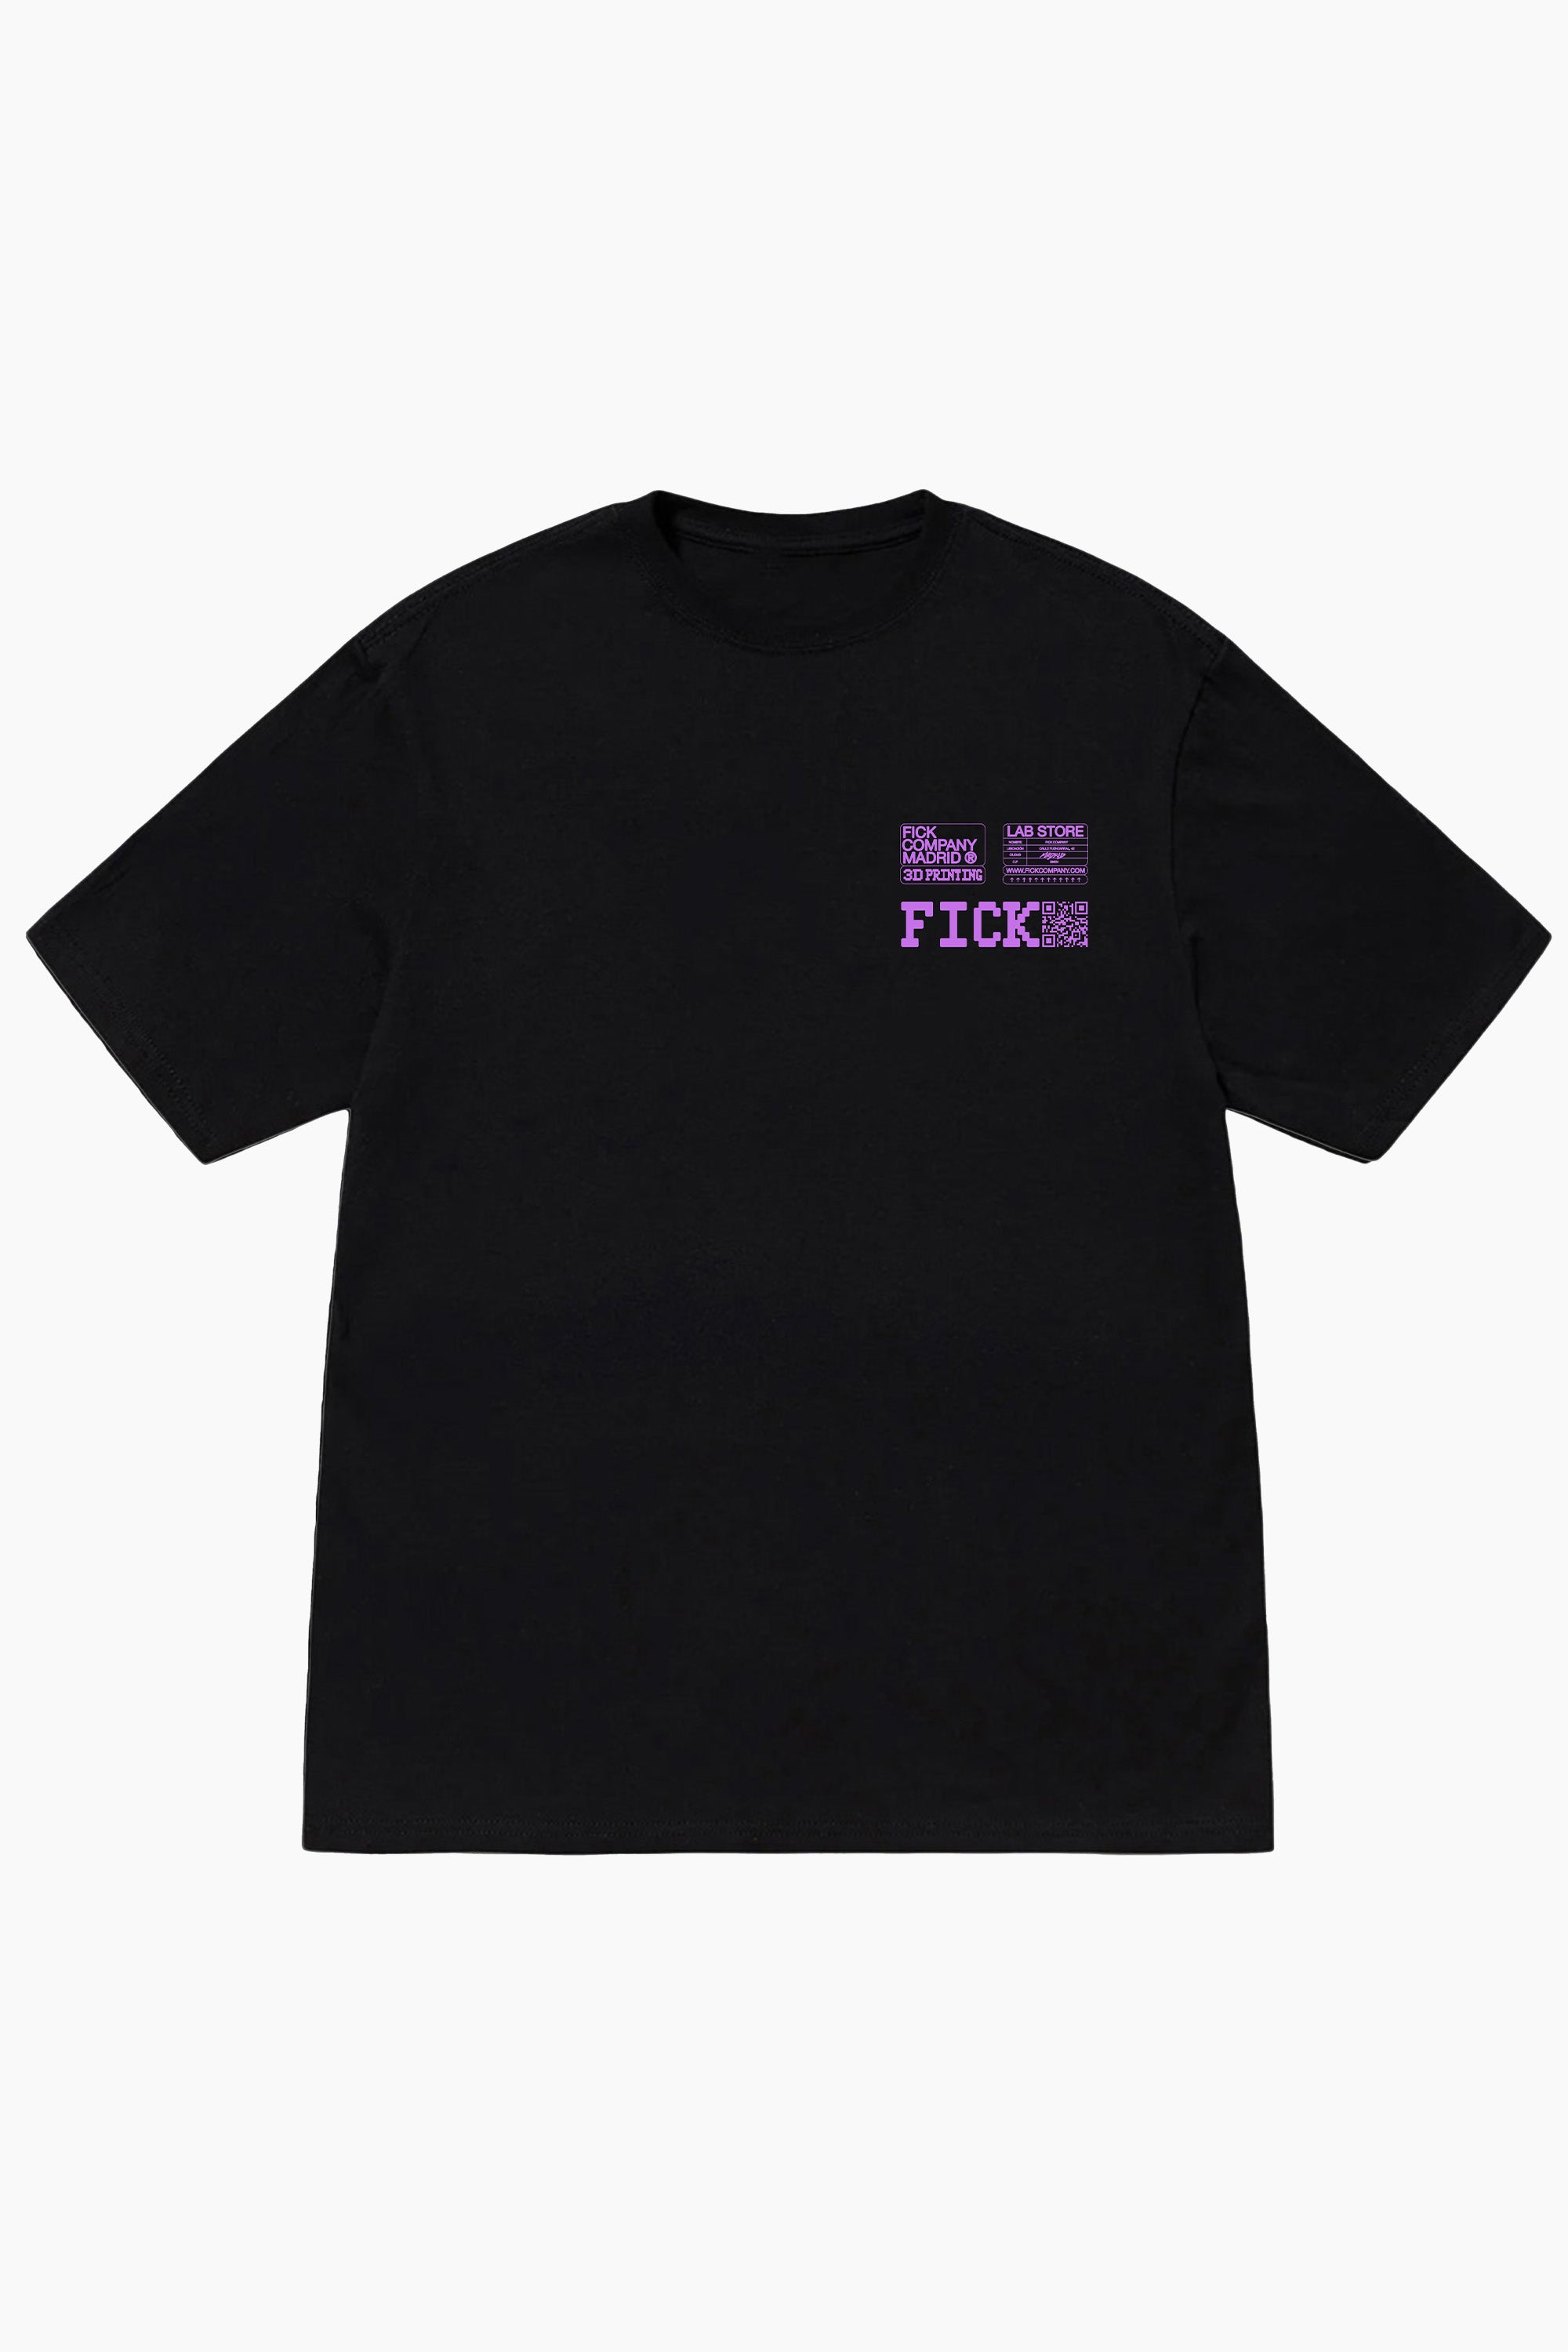 Camiseta Fick Lab Black